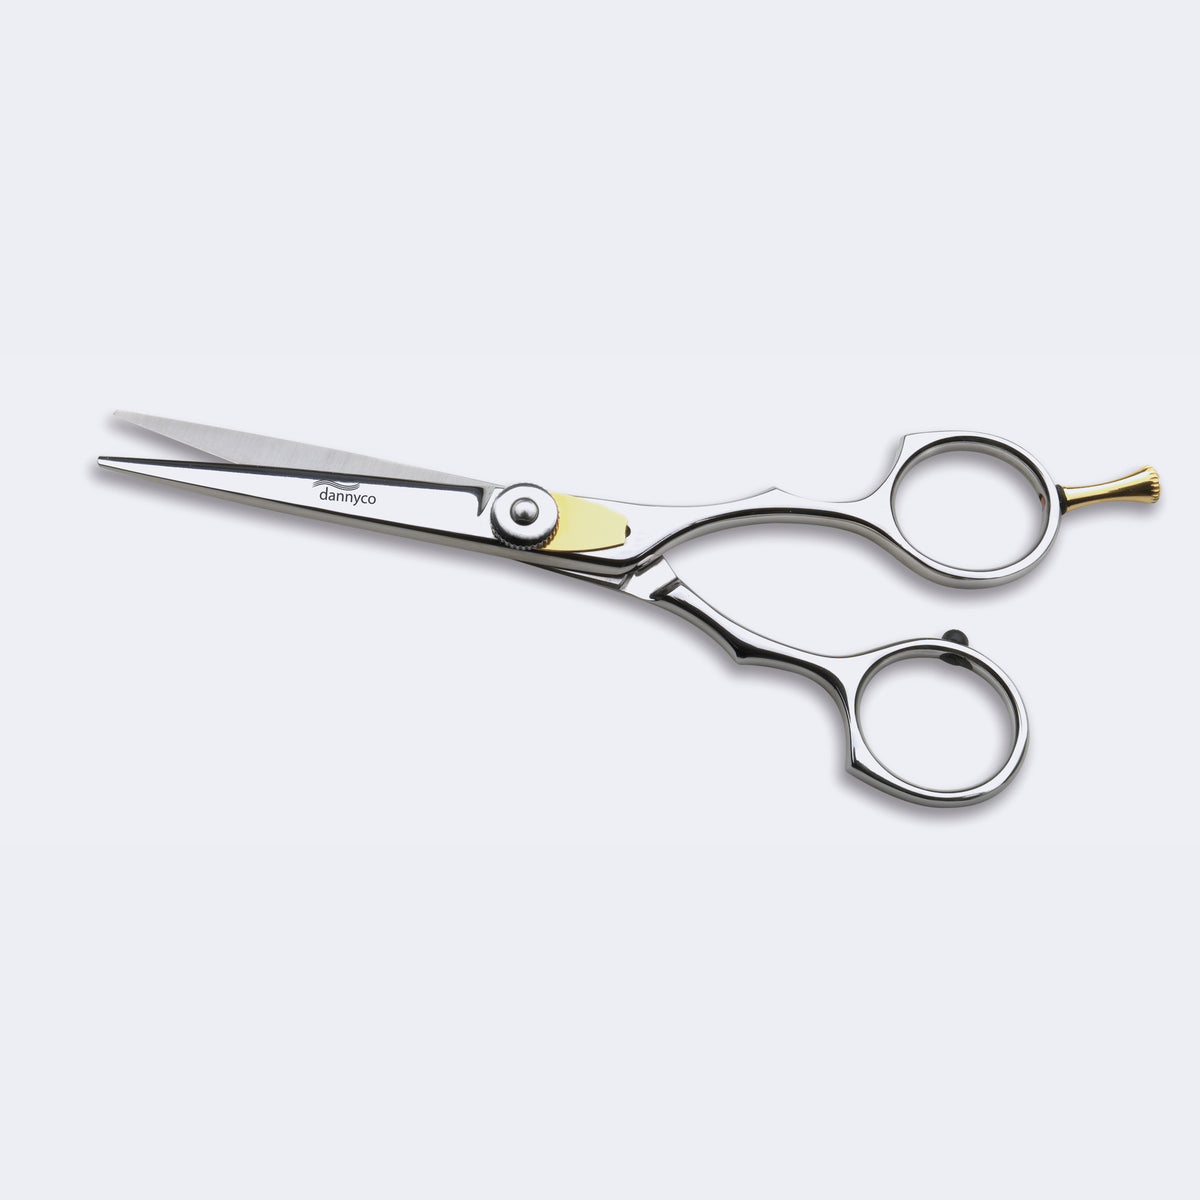 Dannyco JAPANESE STAINLESS STEEL 6" Scissors